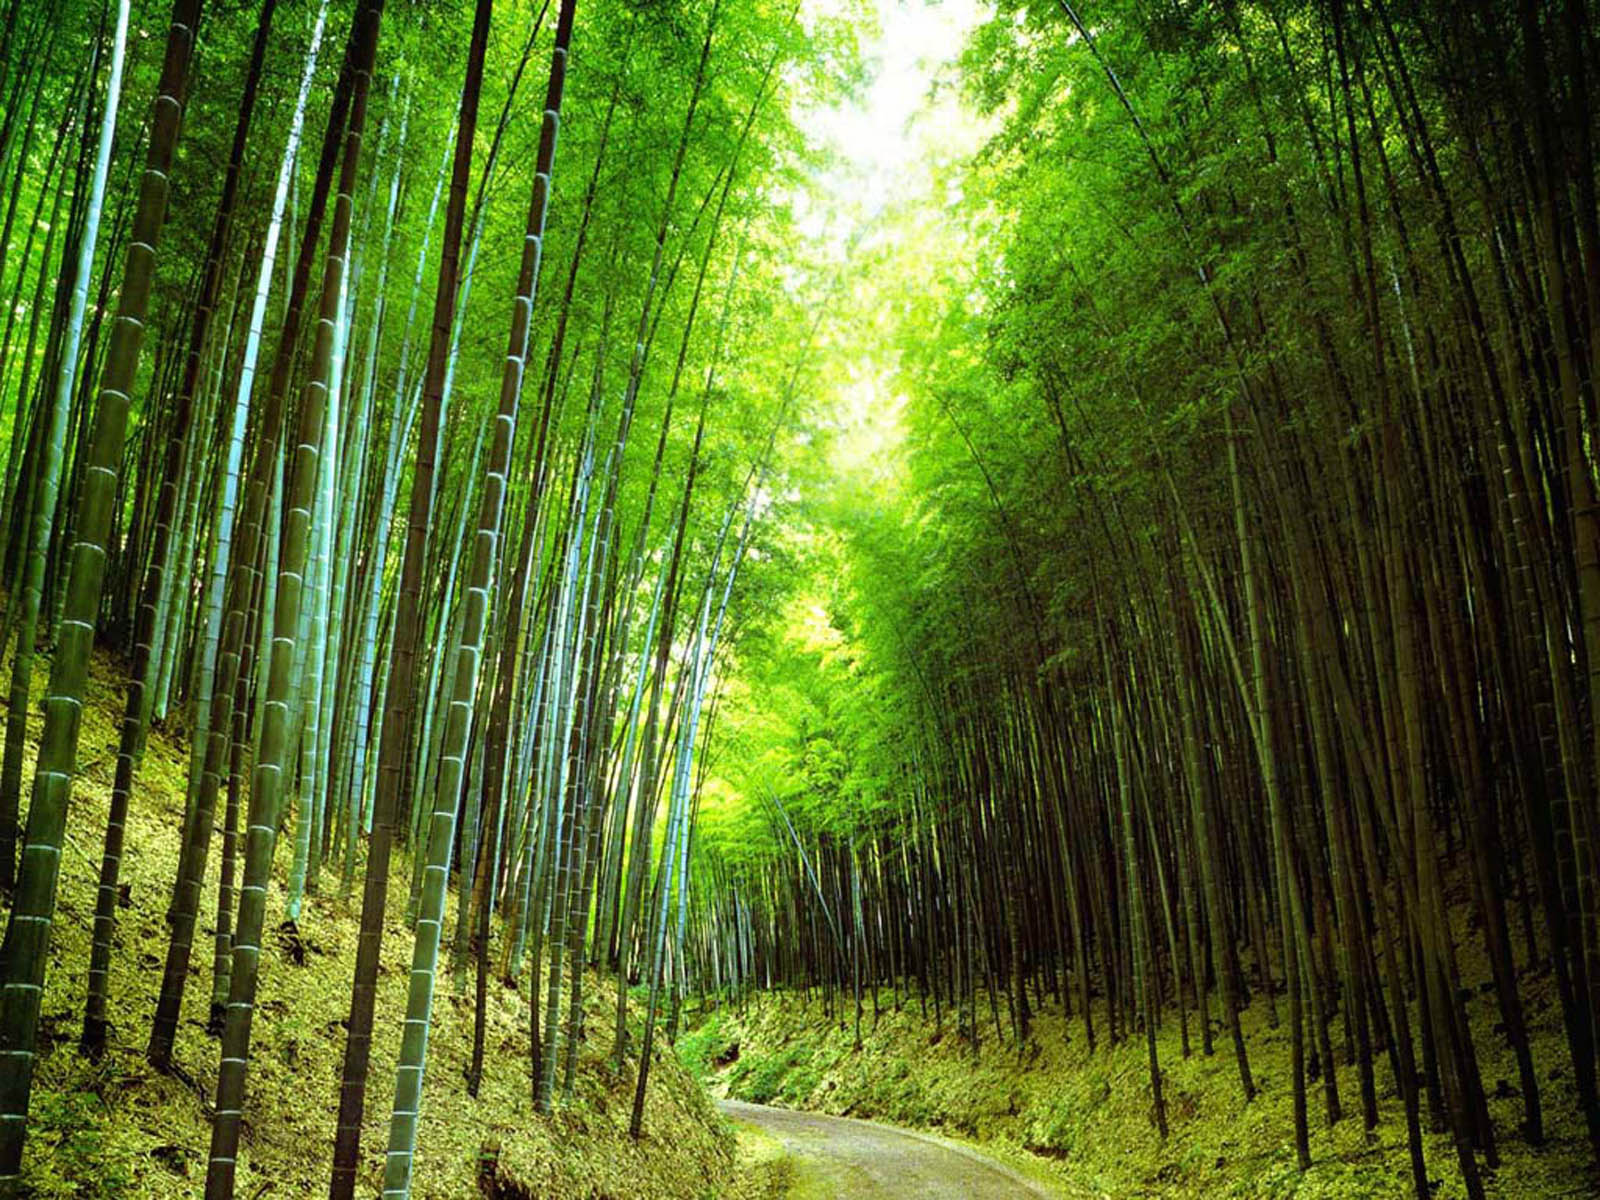 Wallpaper Bamboo Forest